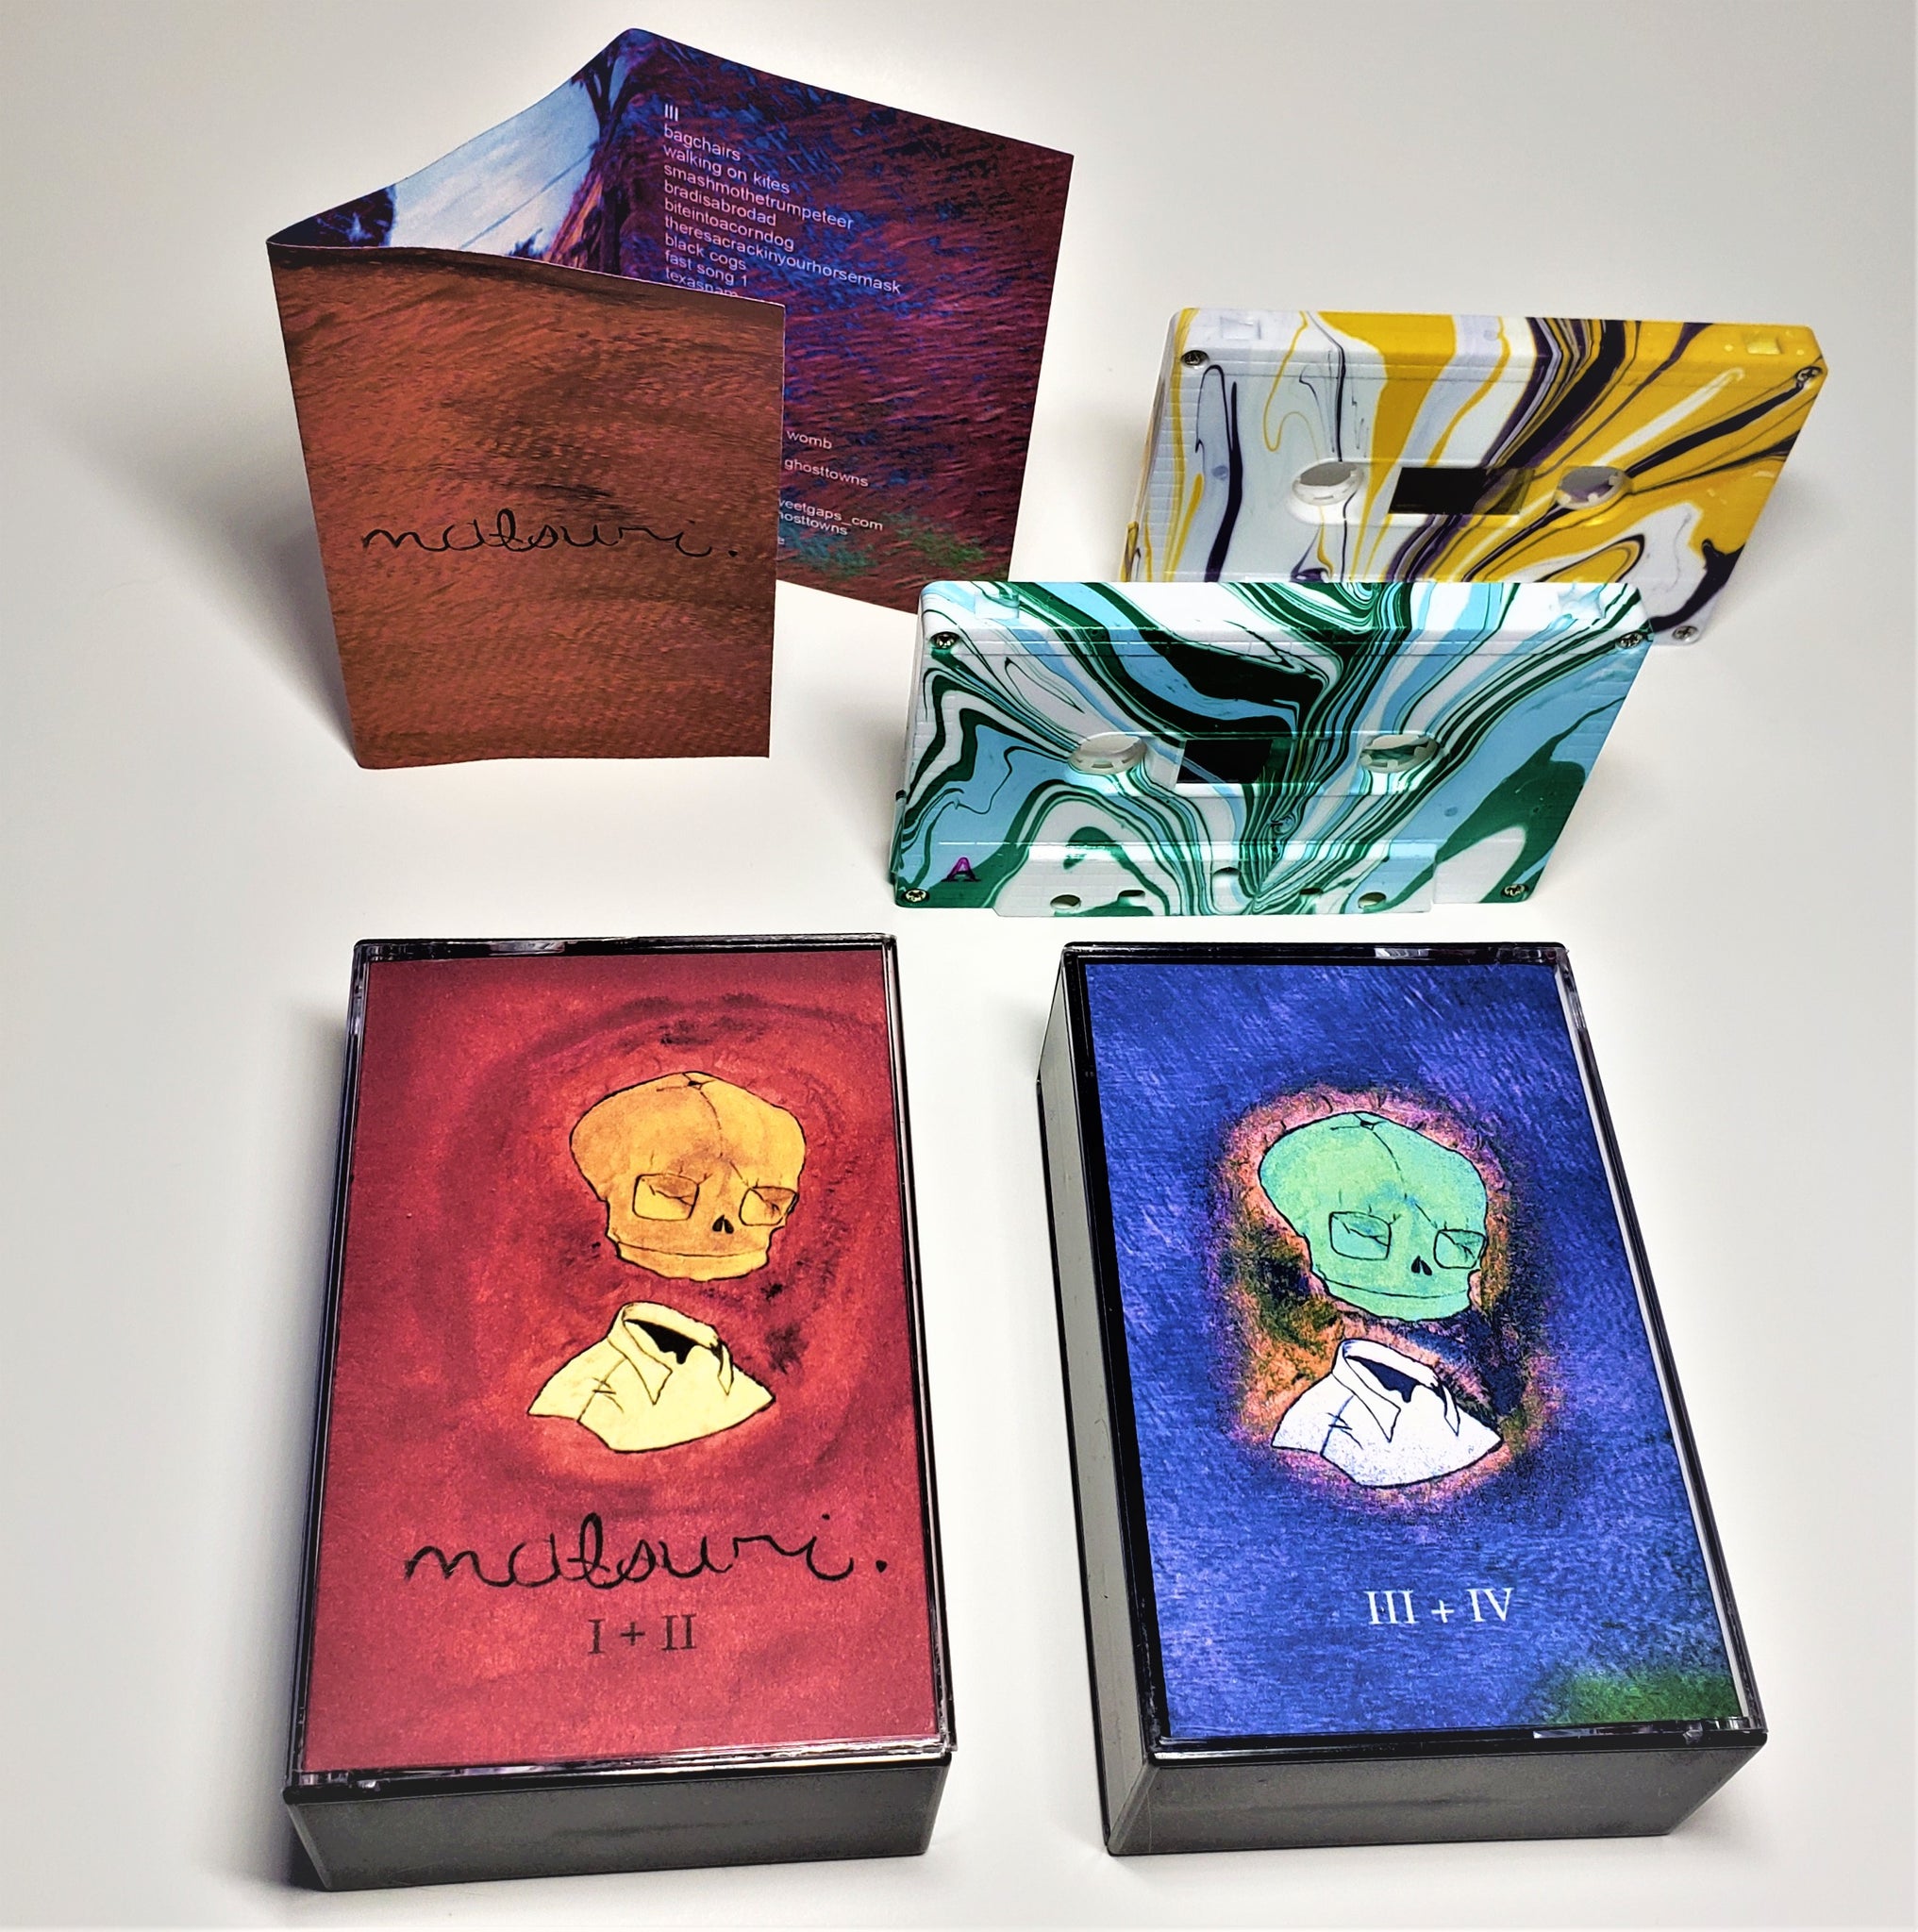 MATSURI - Discography (2 x cassette)